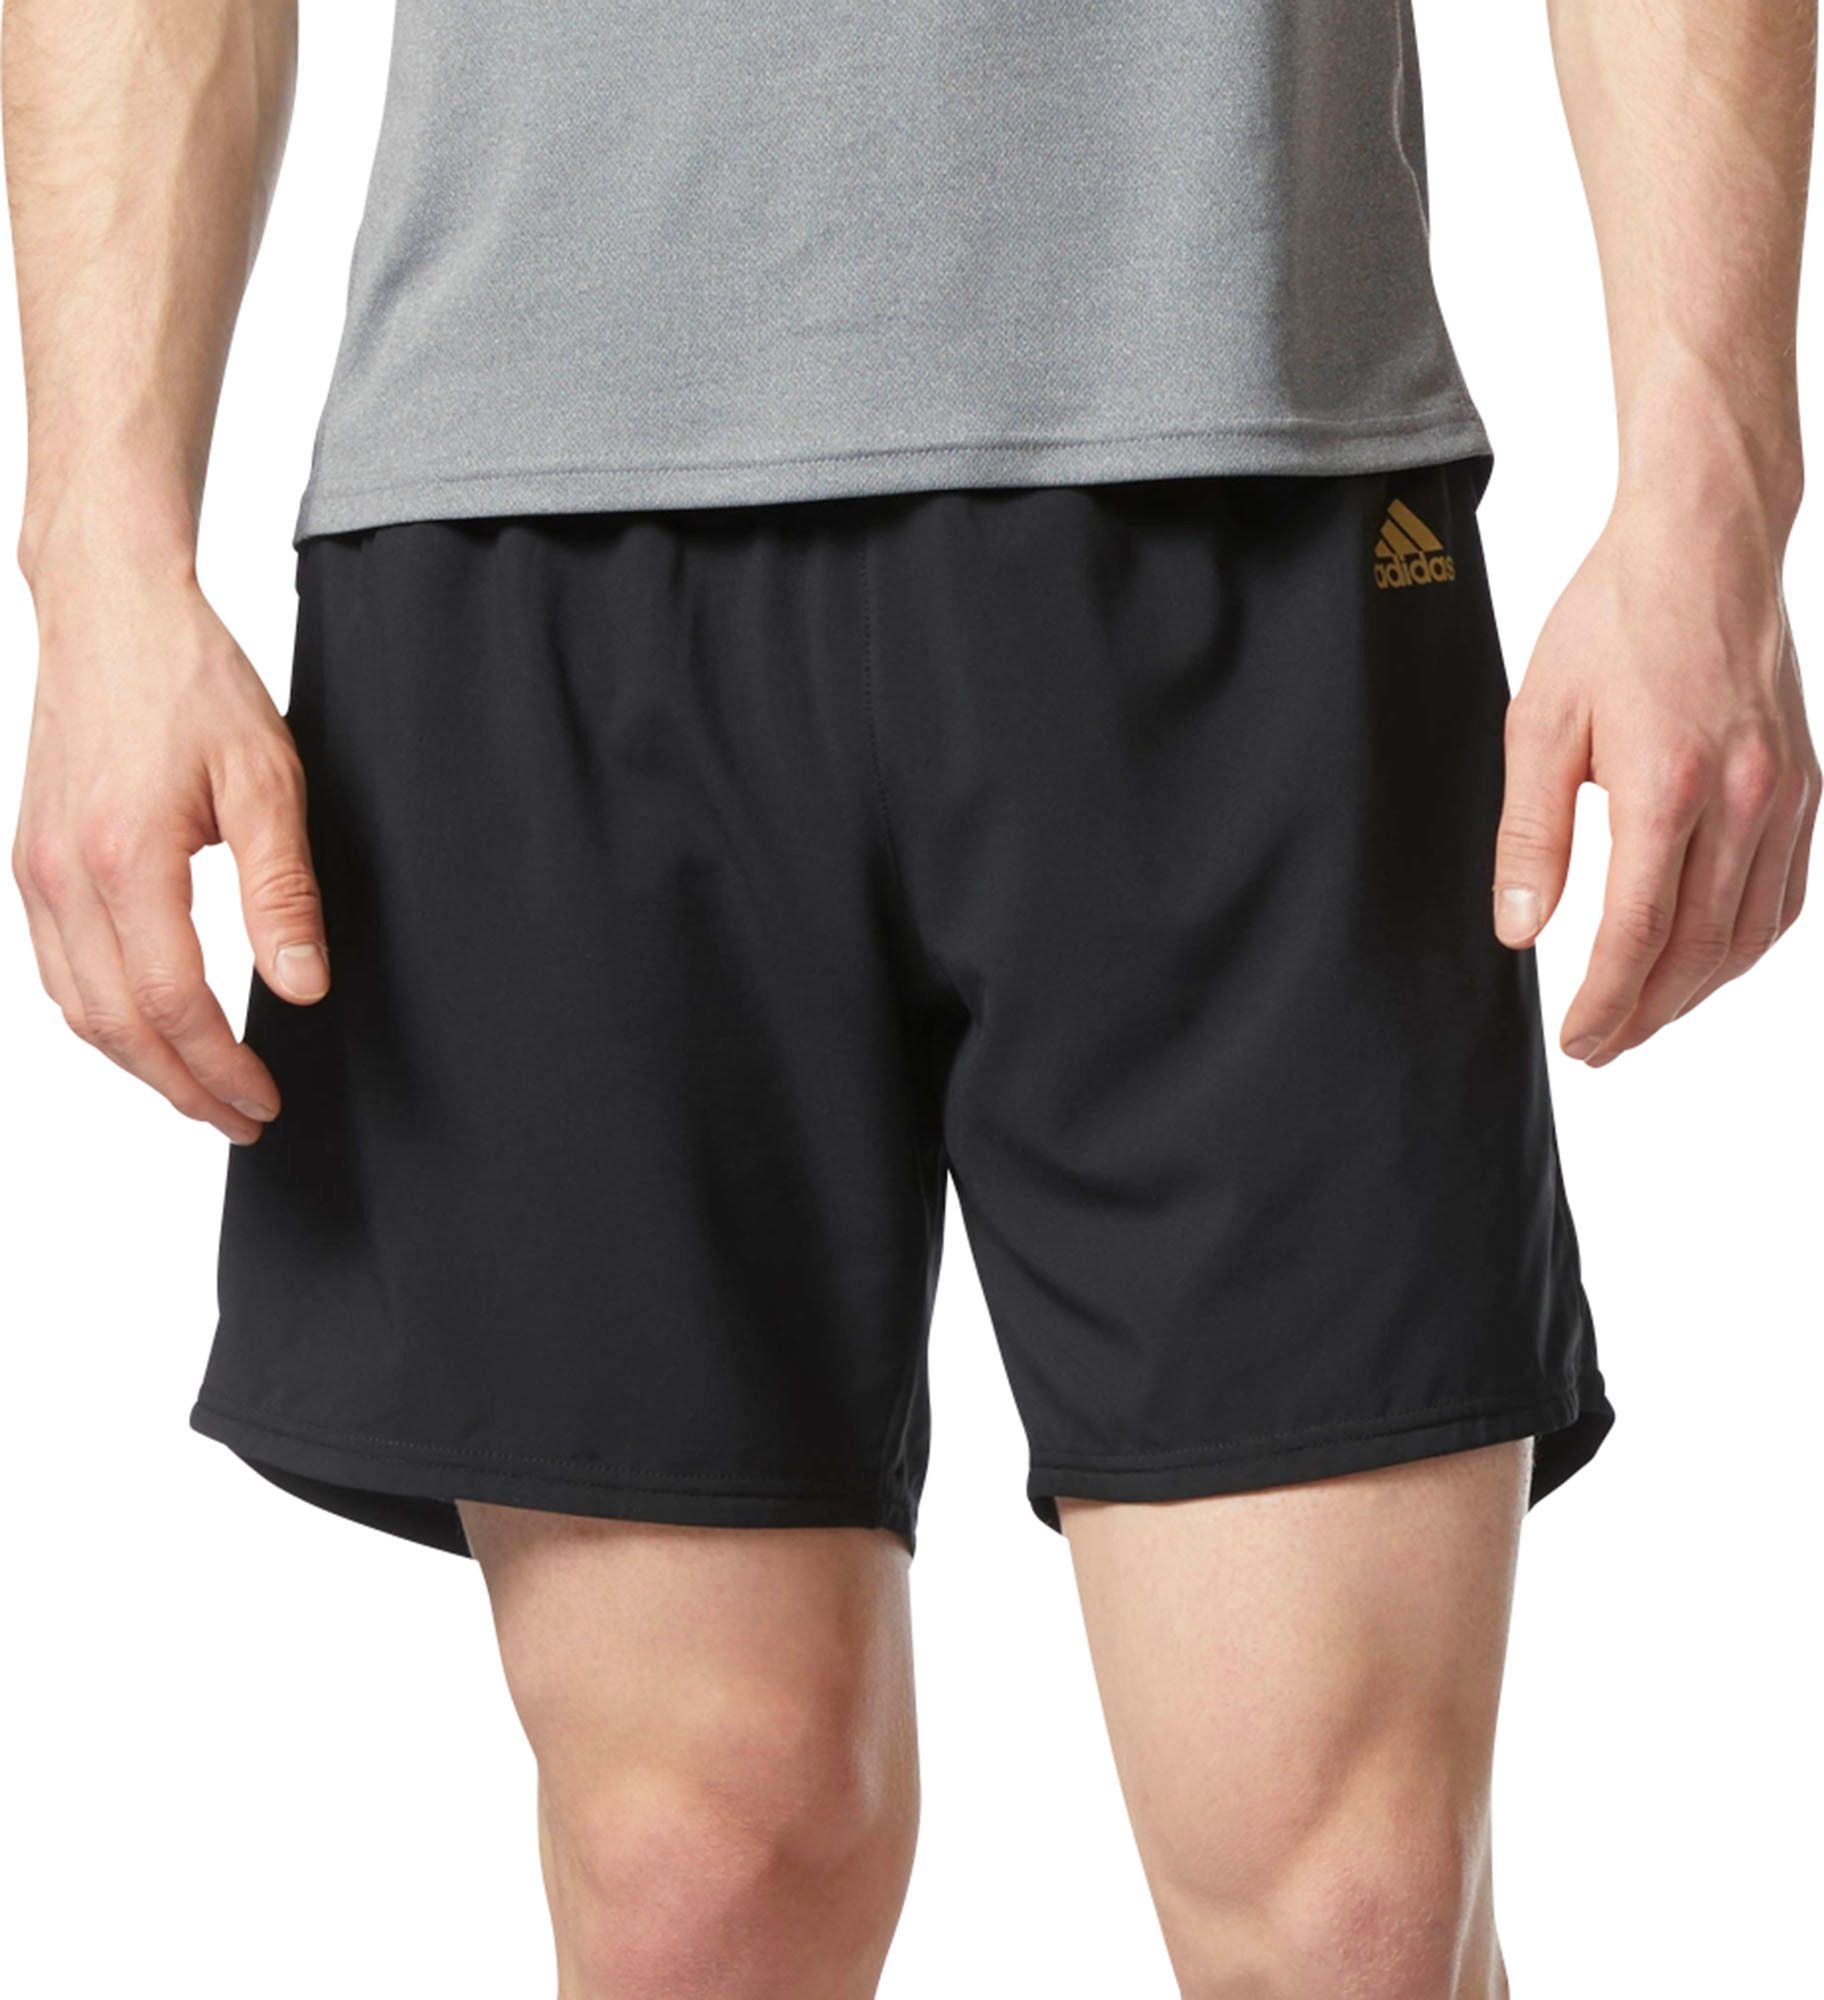 adidas response climalite 5 shorts